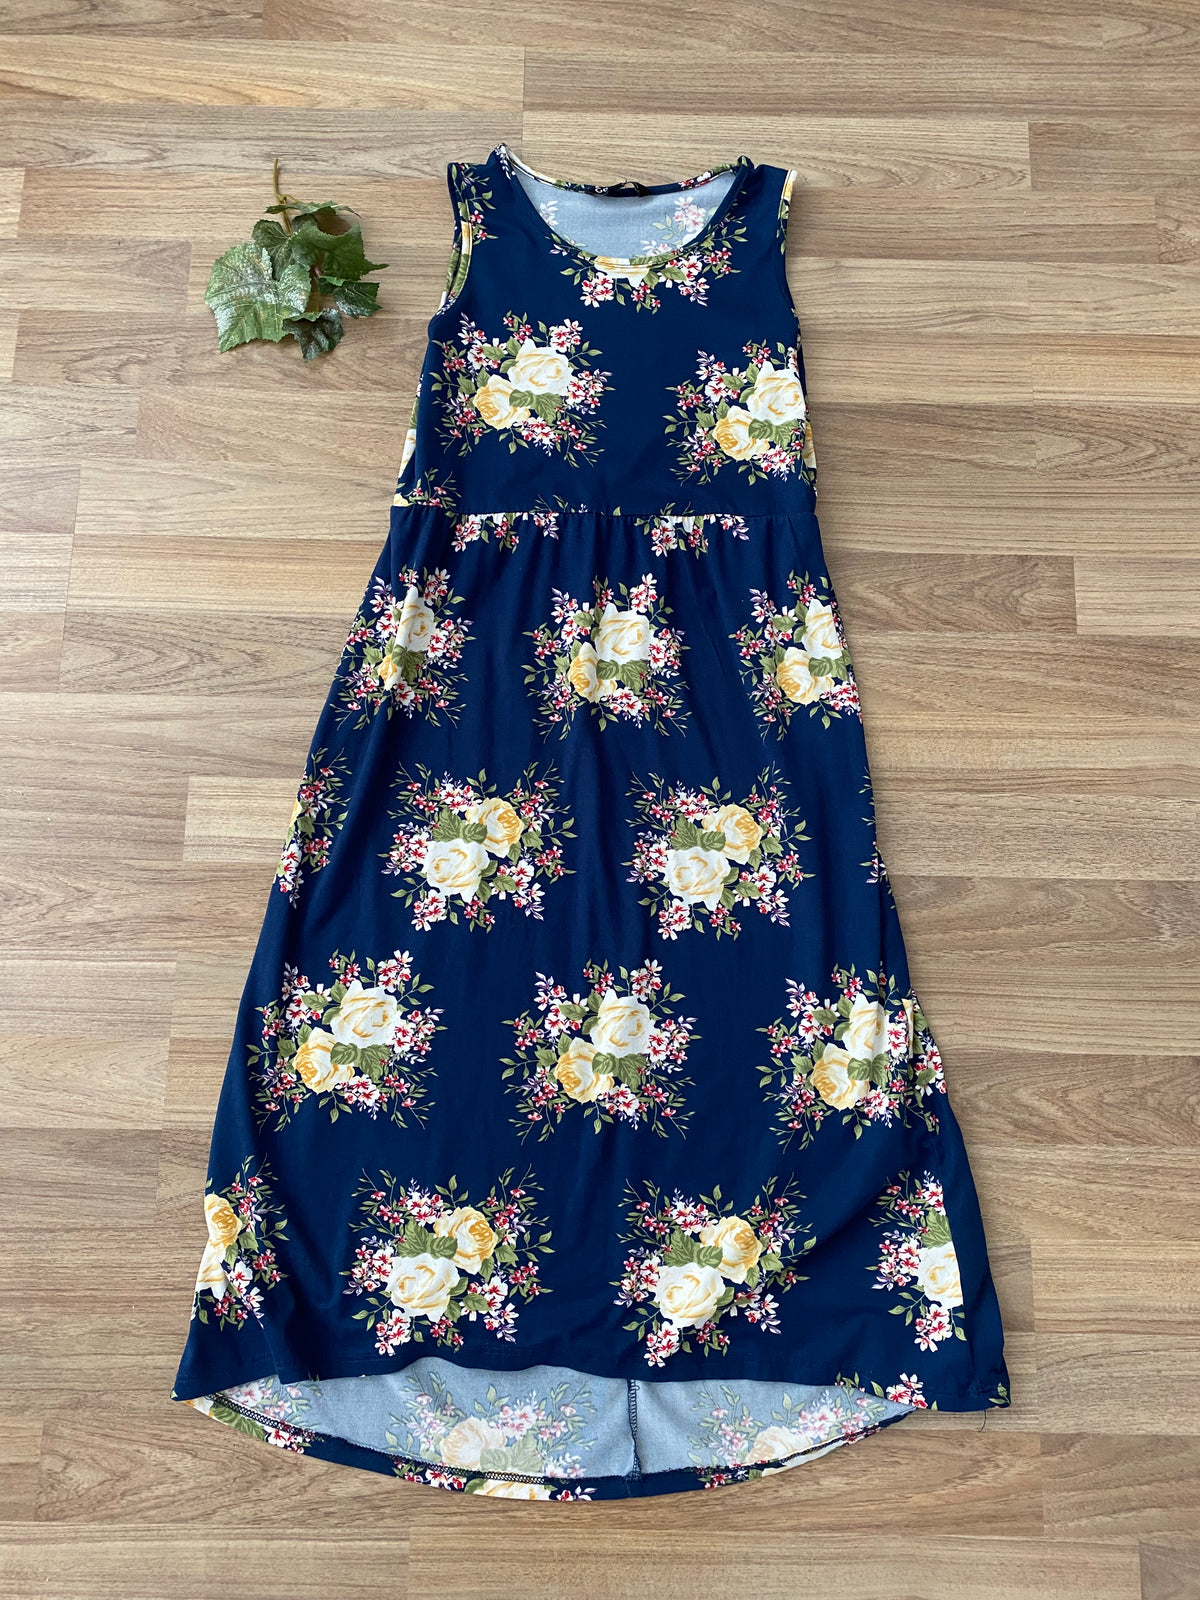 Dress (Girls Size 10-12)